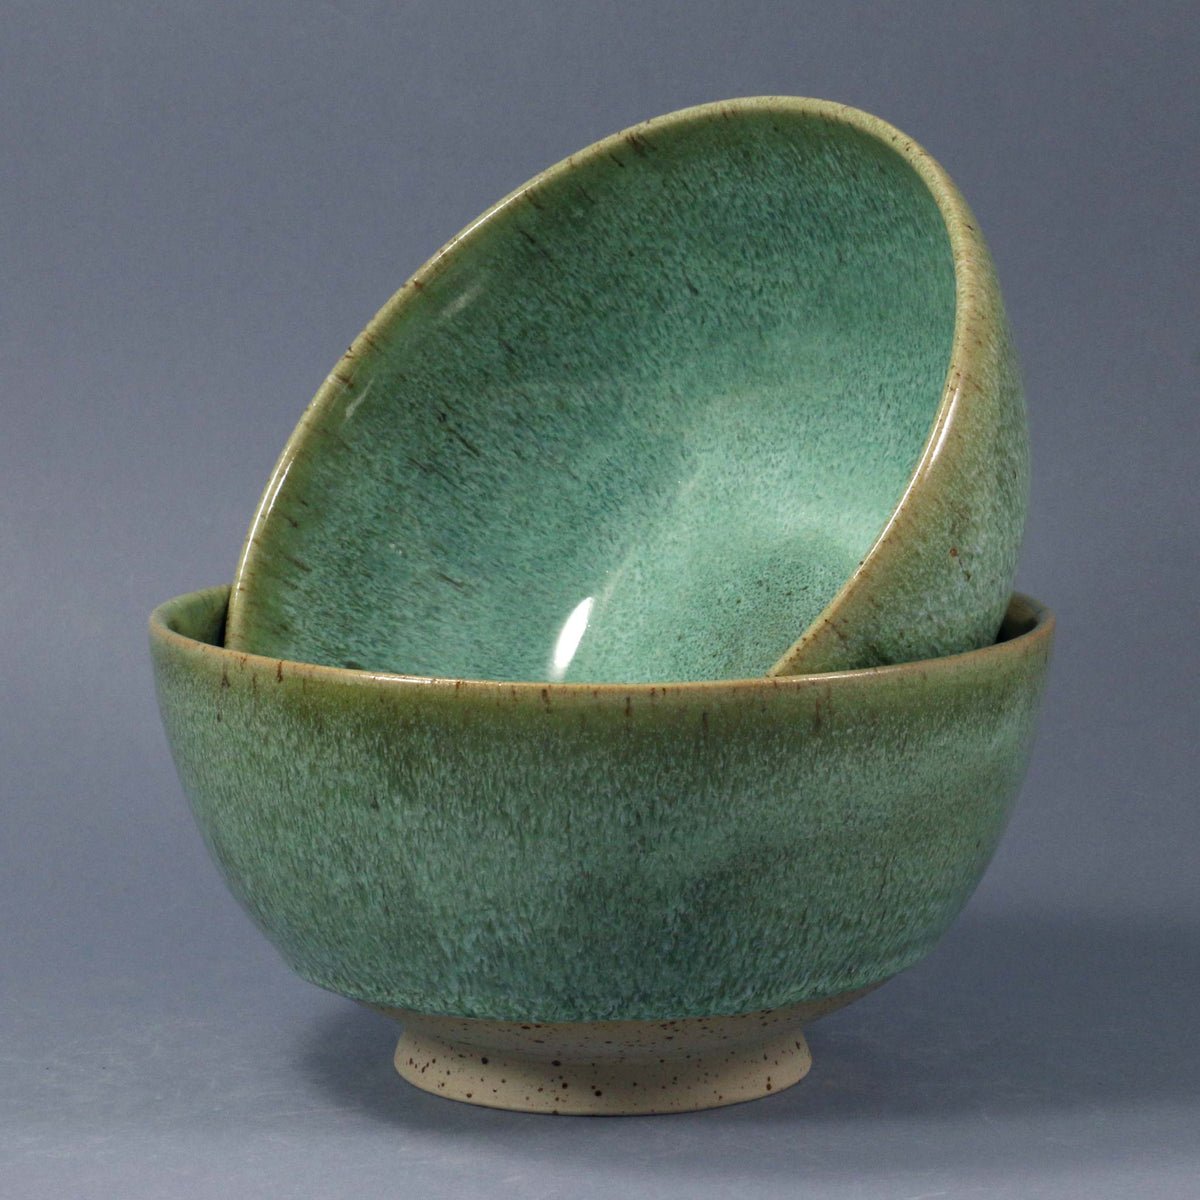 Spring Bowl | Mountain Moss Green | Ramen-Sized Bowl by Studio Arhoj - Lifestory - Studio Arhoj